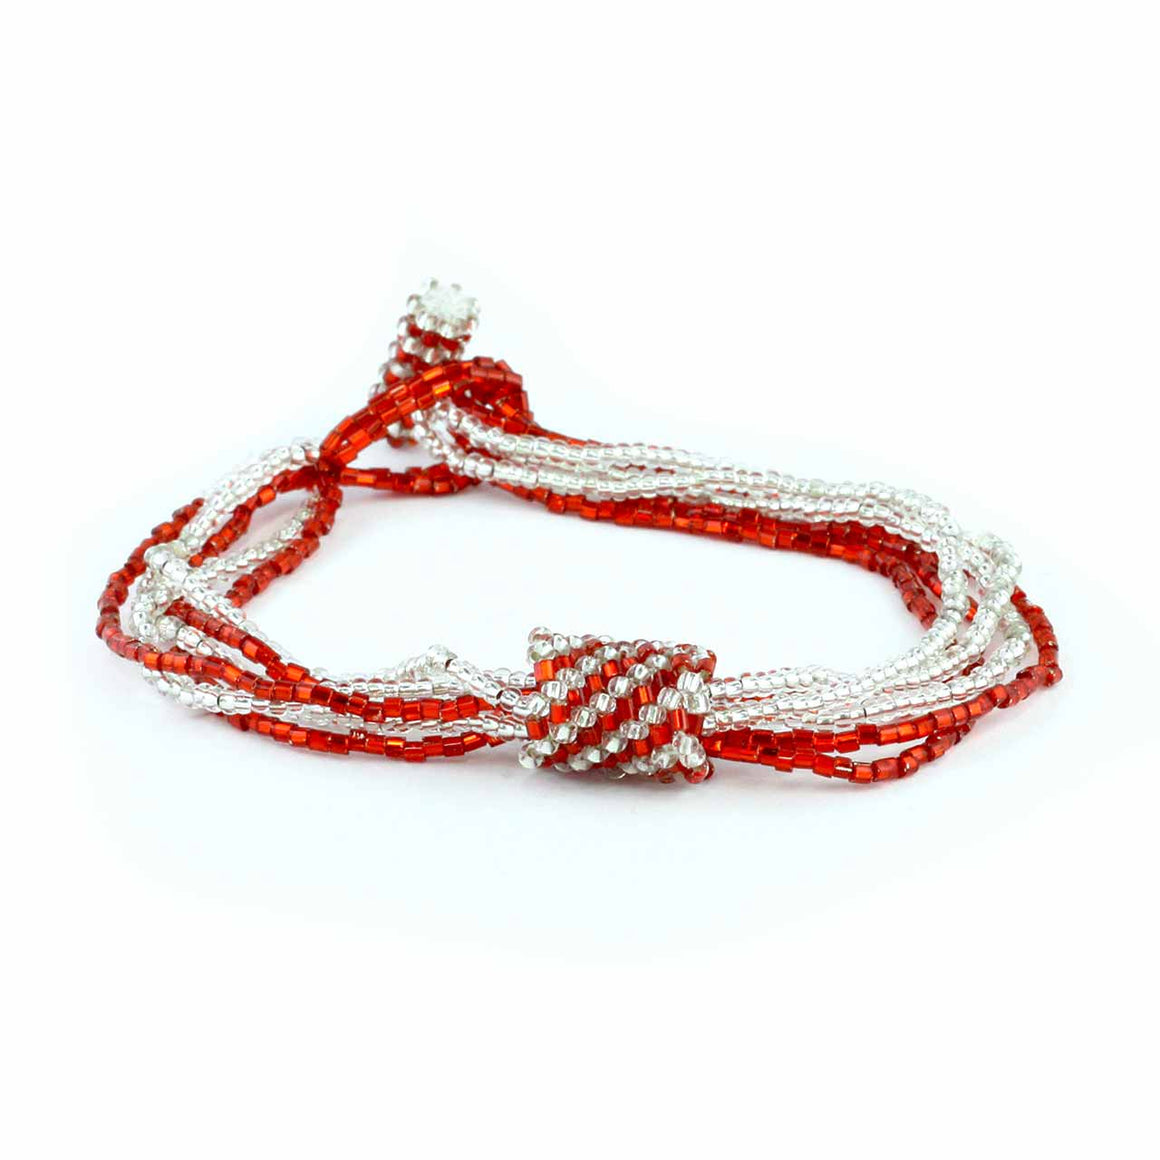 5 Strand Bracelet with Decorative Crocheted Spiral